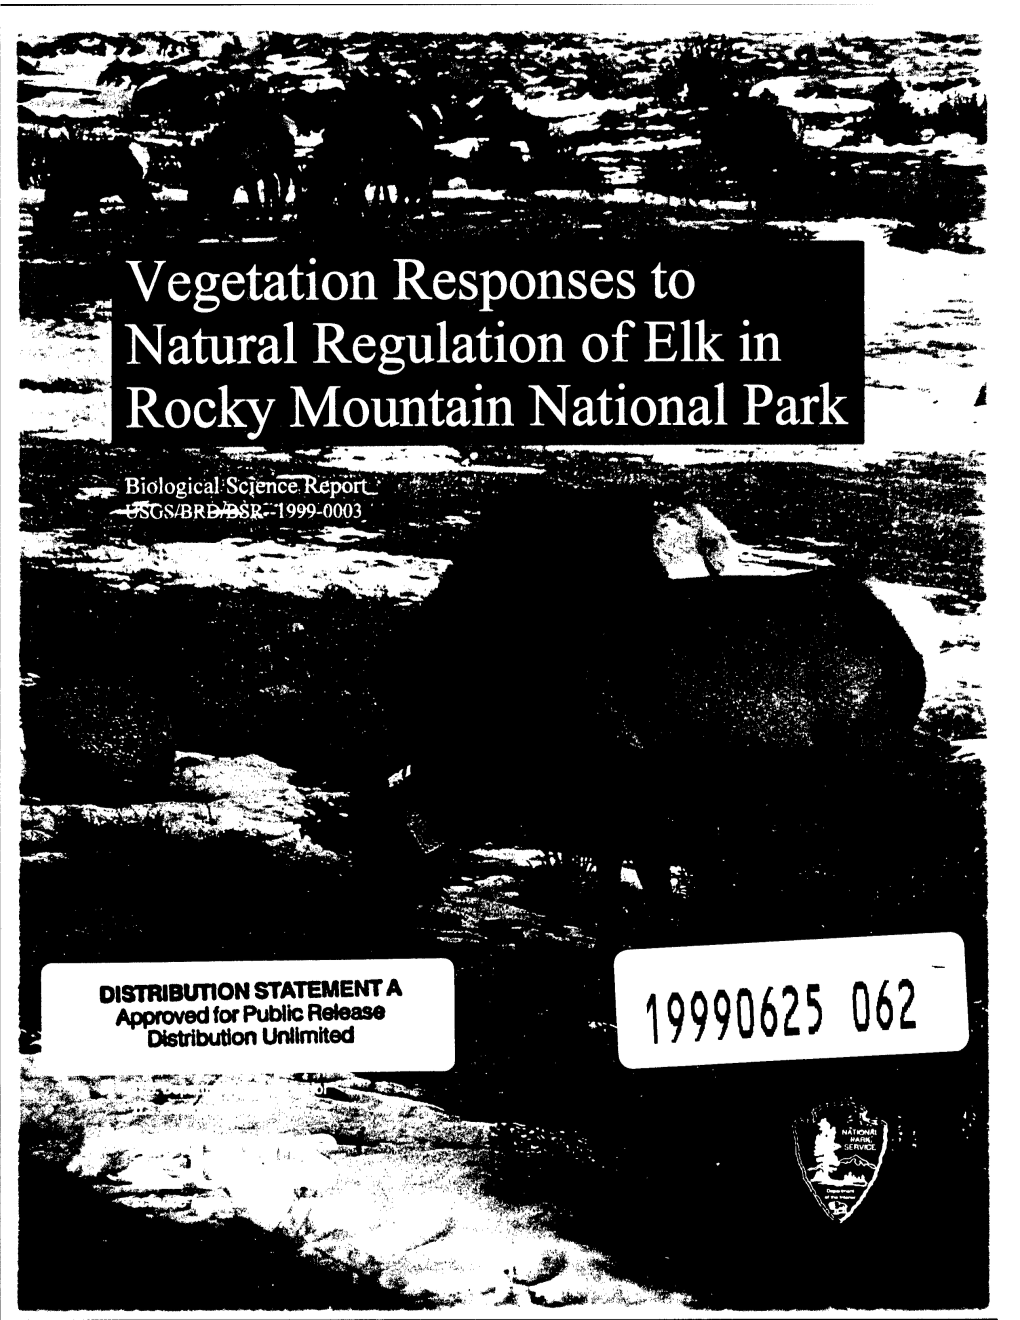 Vegetation Responses to Natural Regulation of Elk in Rocky Mountain National Park